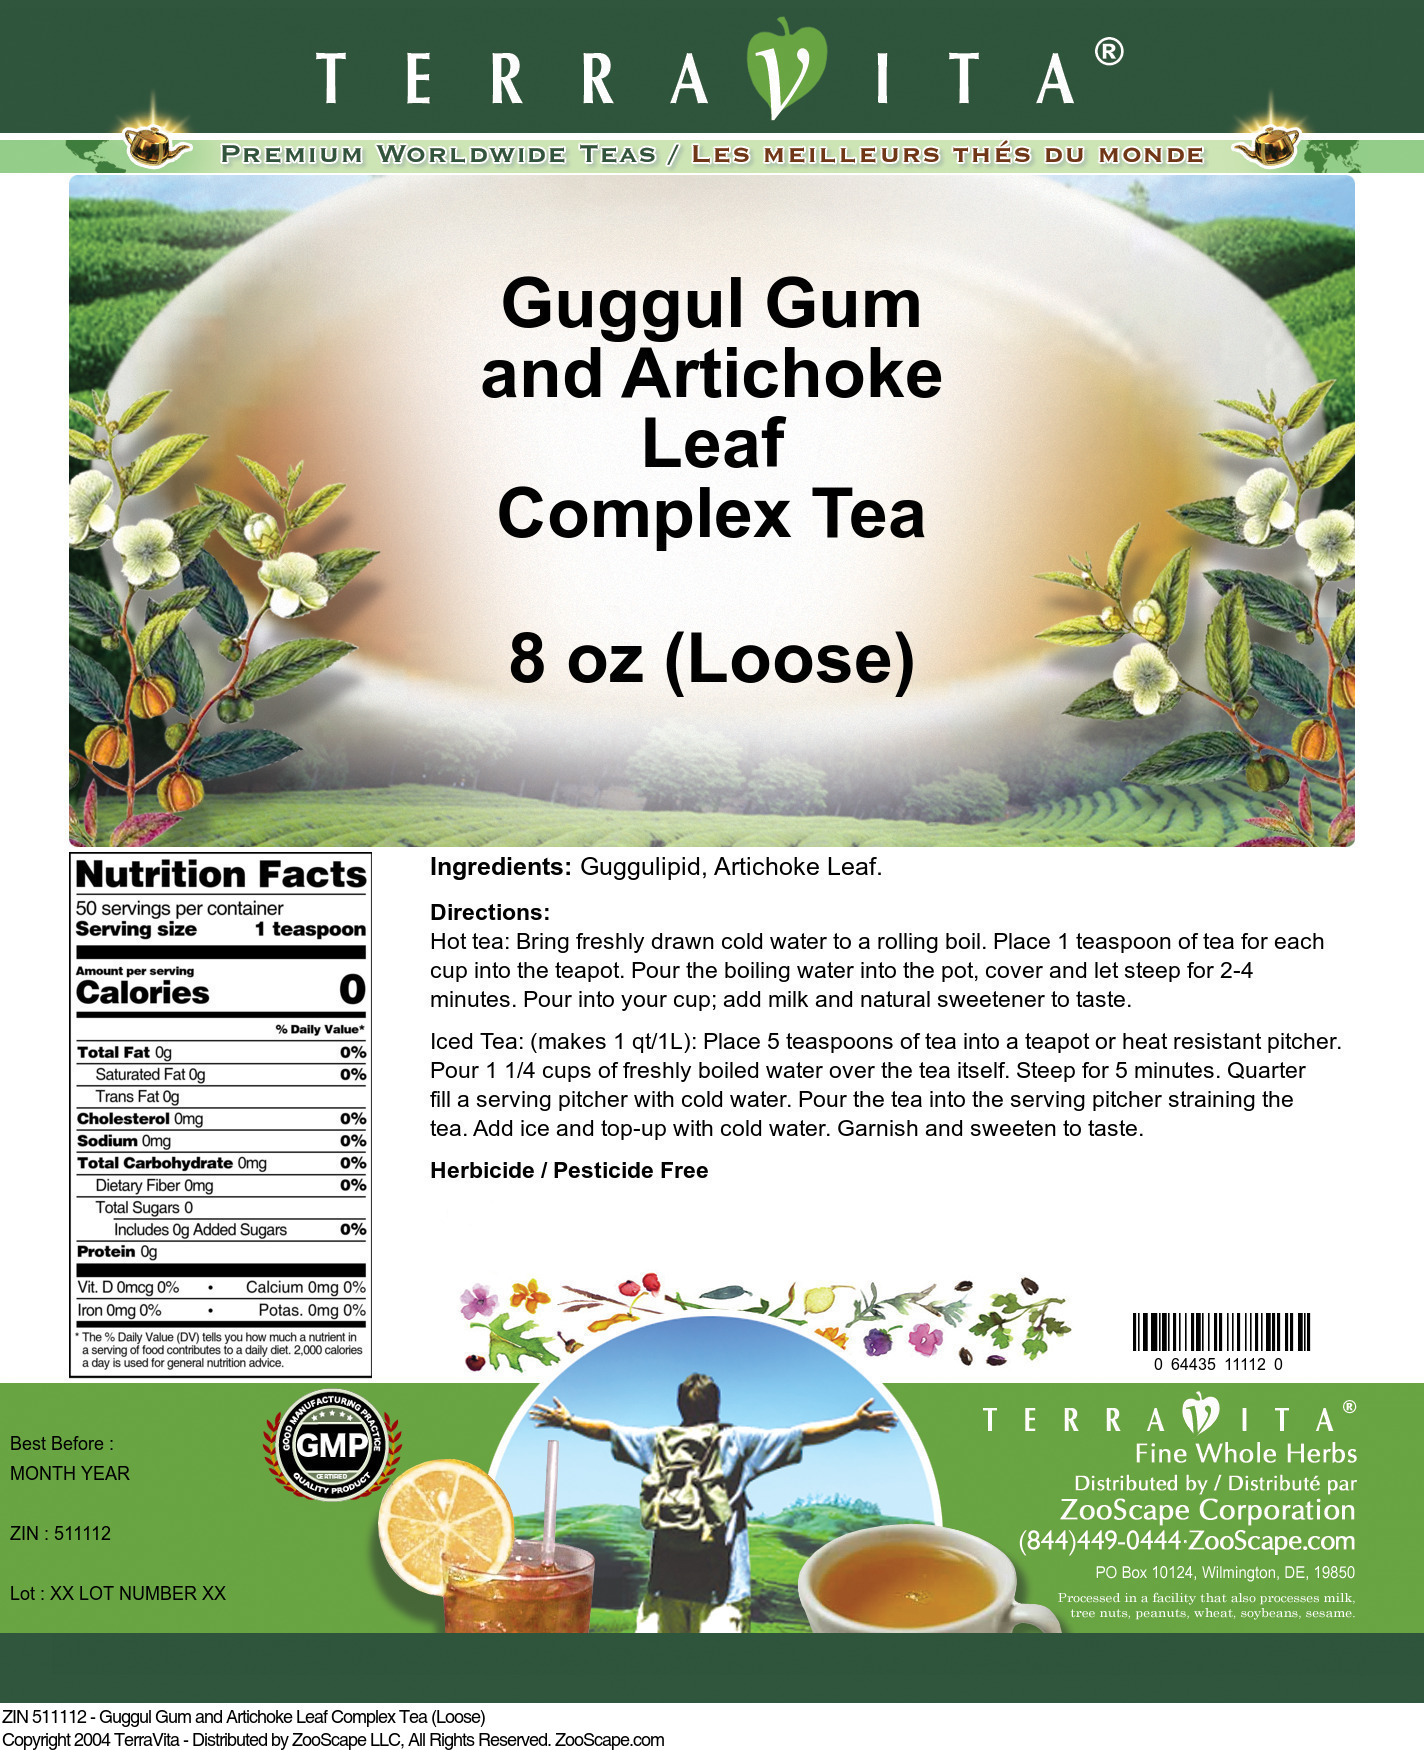 Guggul Gum and Artichoke Leaf Complex Tea (Loose) - Label